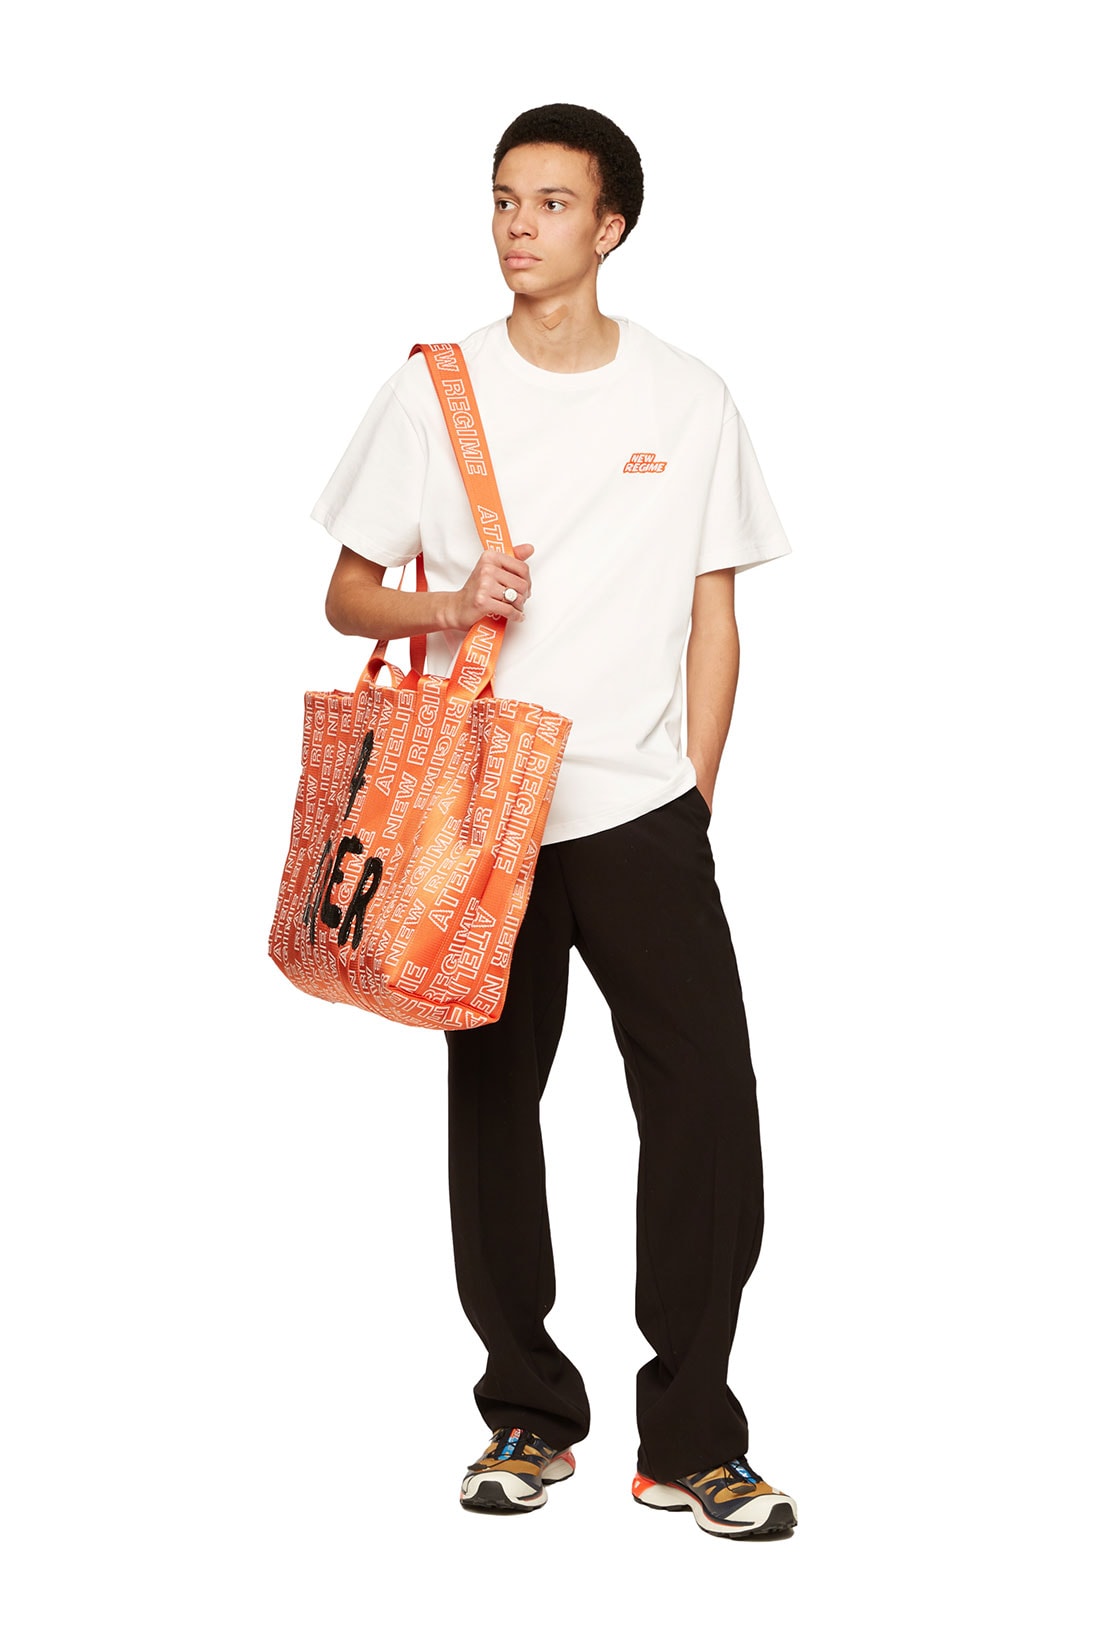 atelier new regime montreal brand fall winter lookbook white logo tshirt sweatpants orange bags